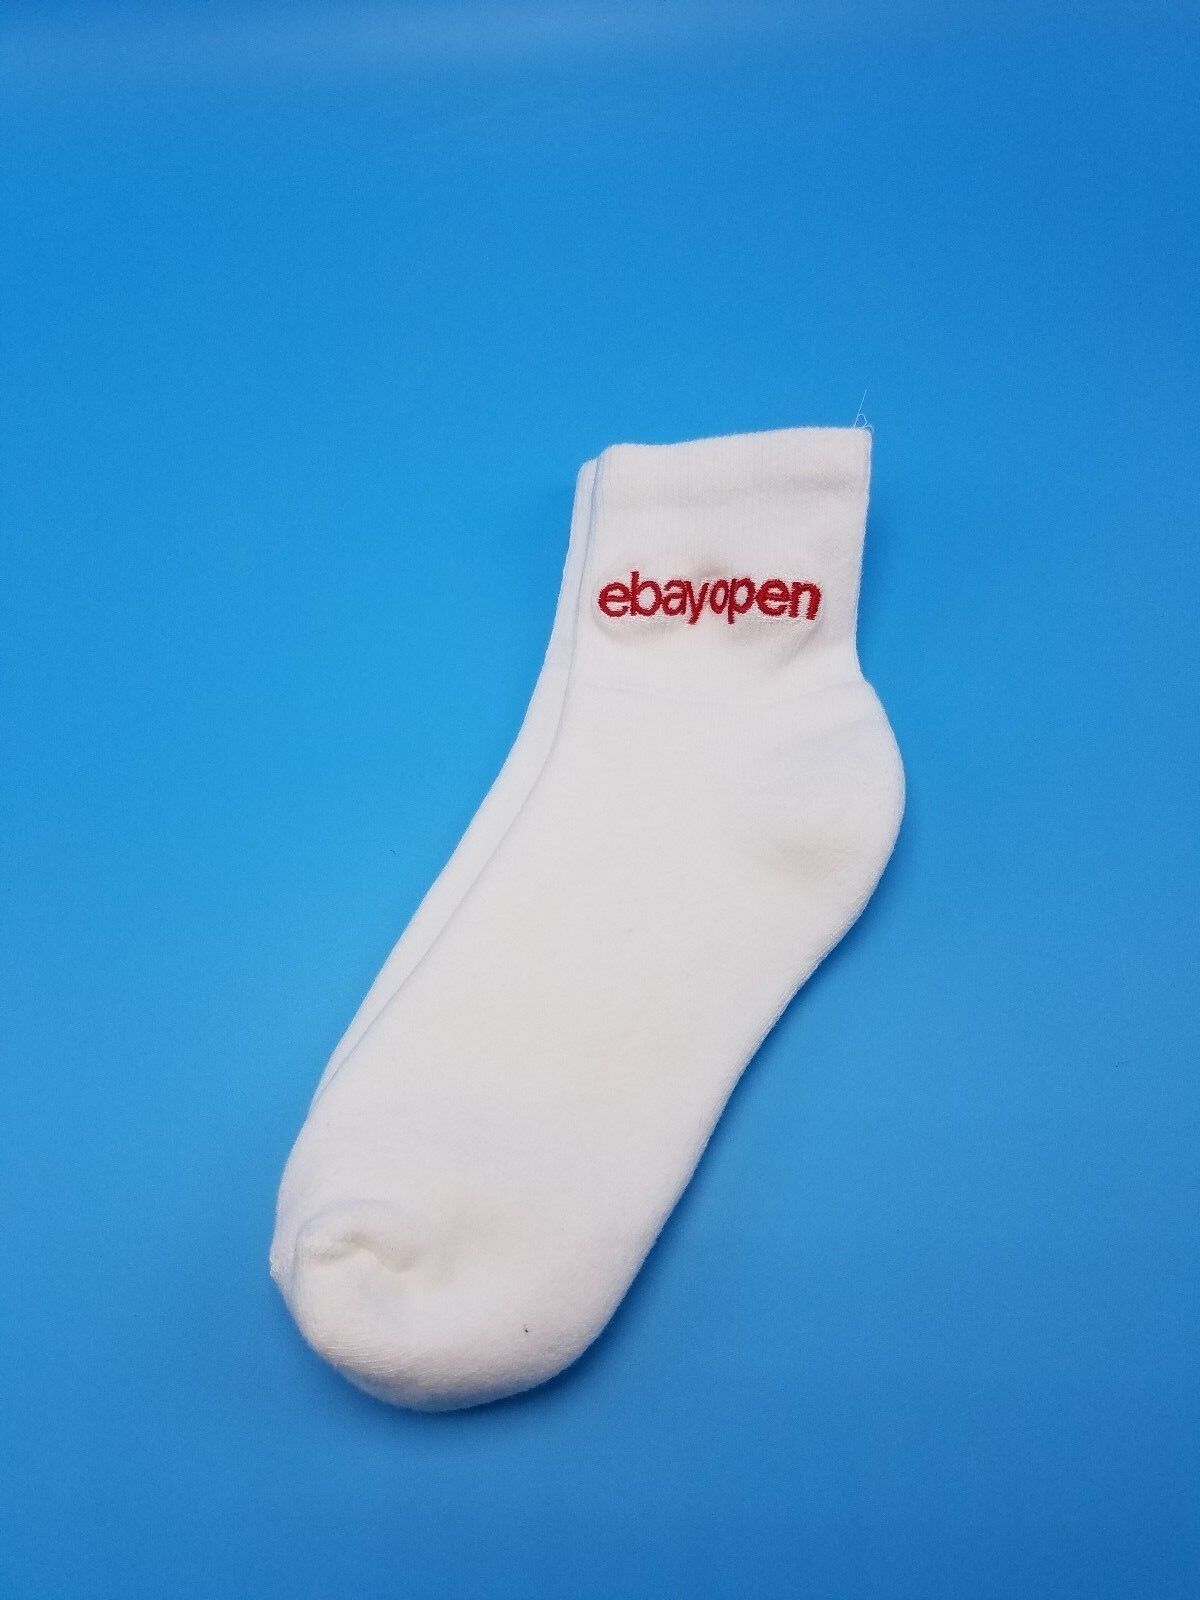 Athletic Socks Ebay Open 2017 White Ankle Length Embroidered Logo Unisex NEW